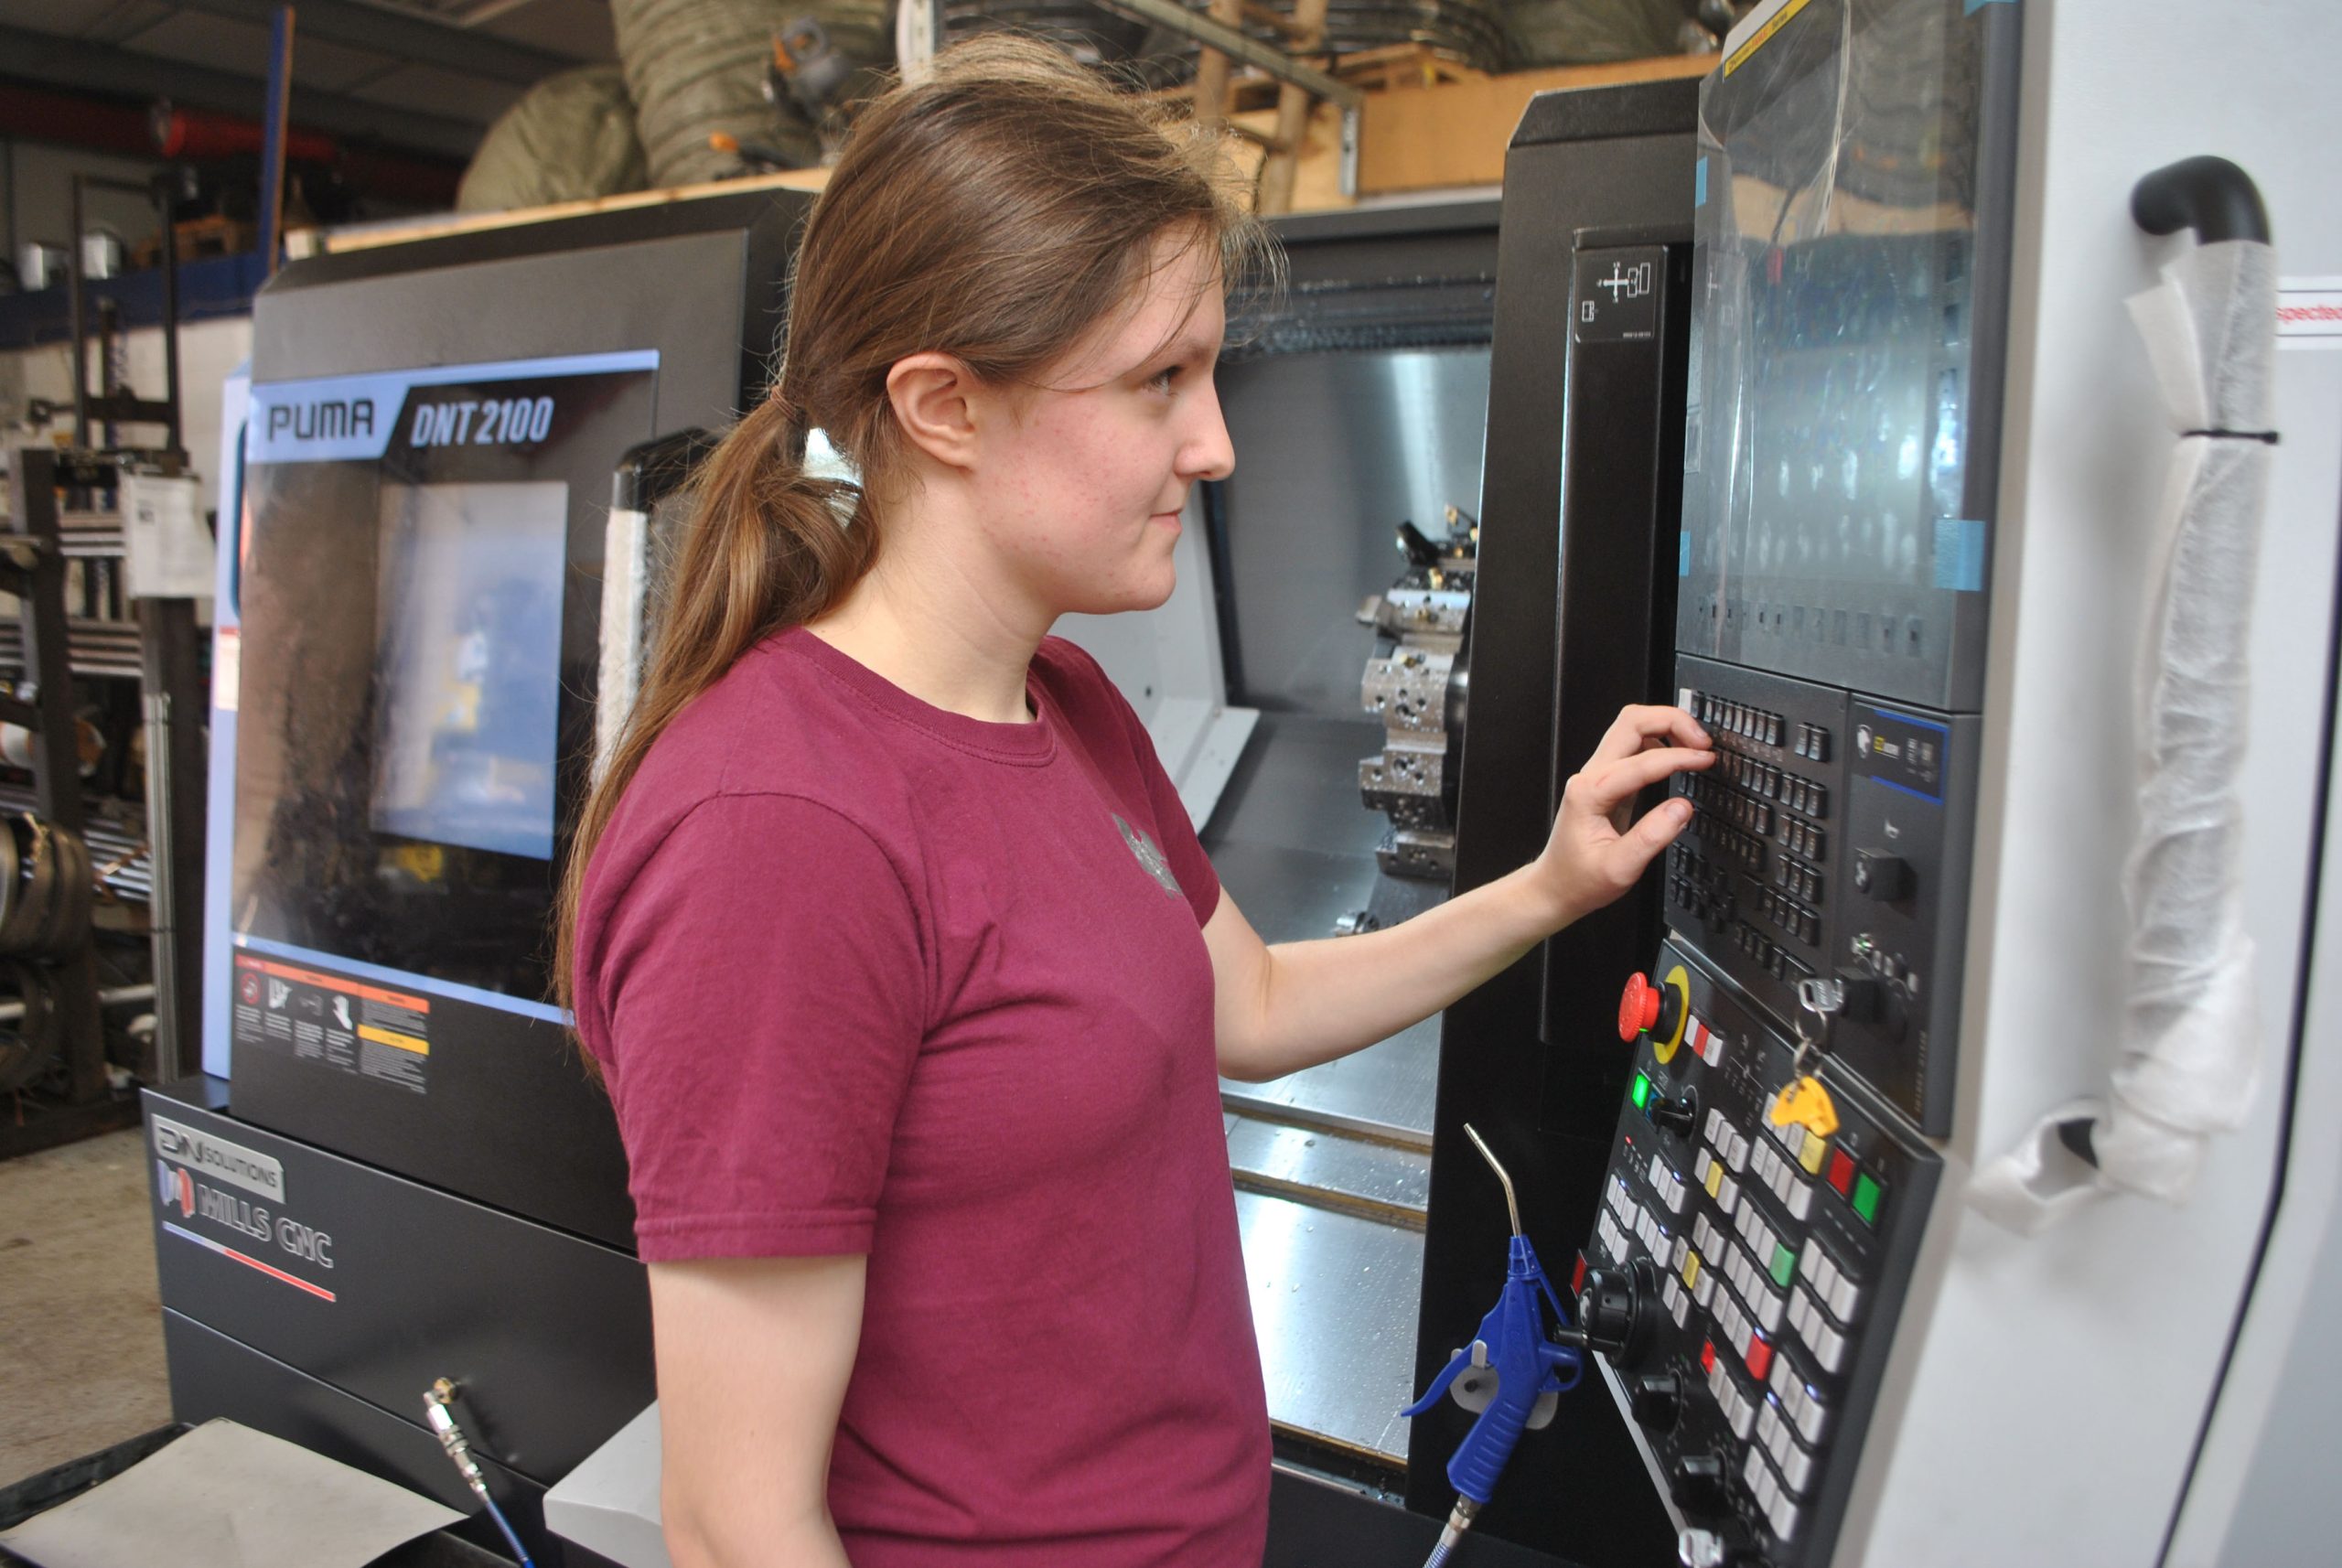 Female CNC Operator at controls of DNT 2100 lathe